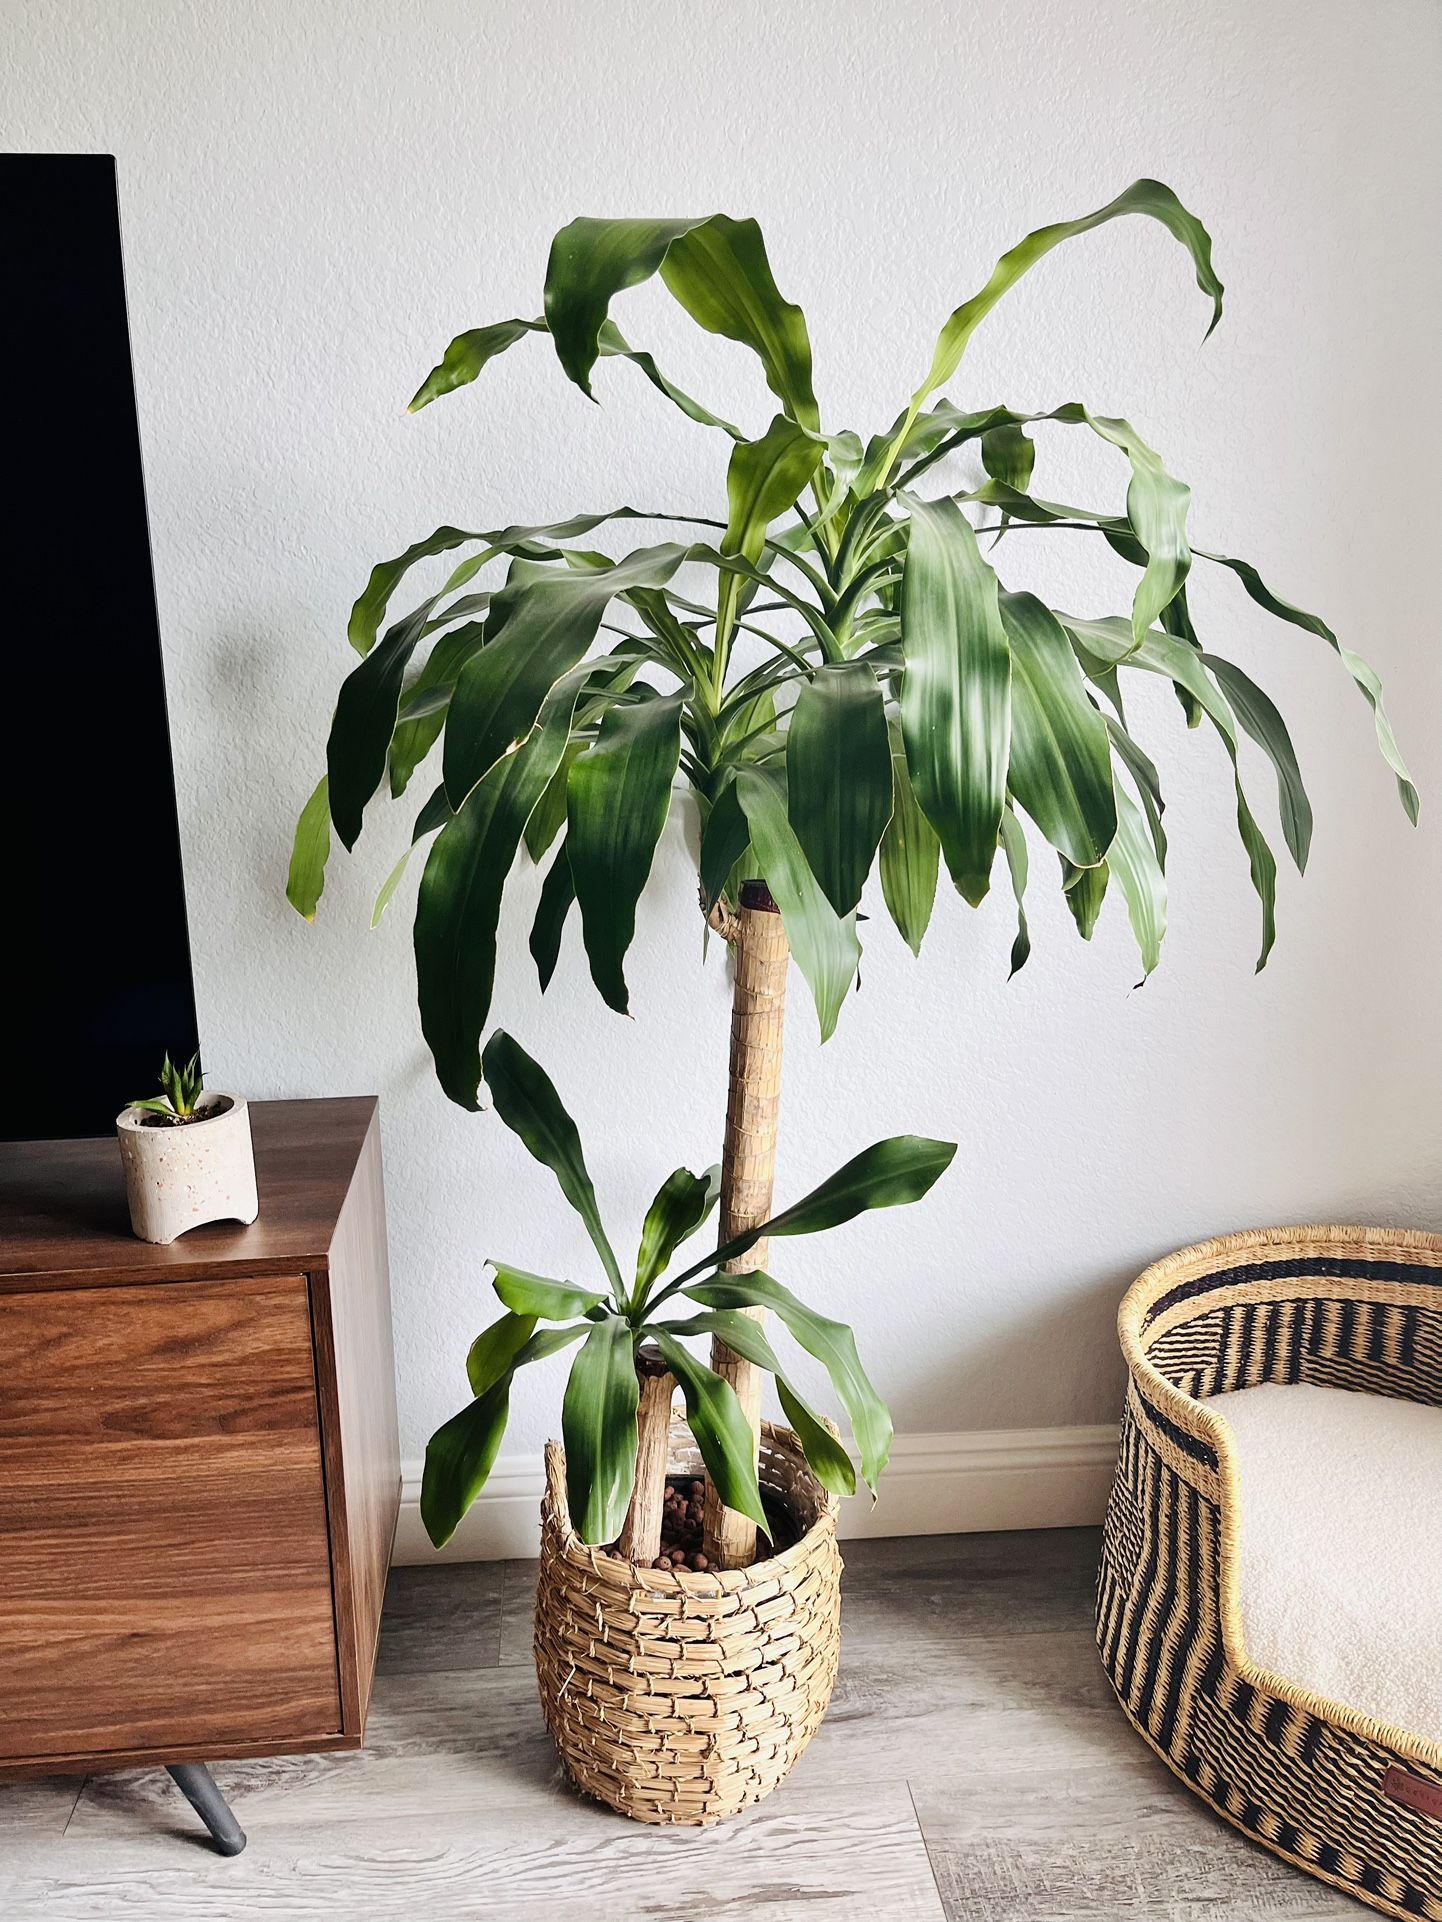 Tall Plant 